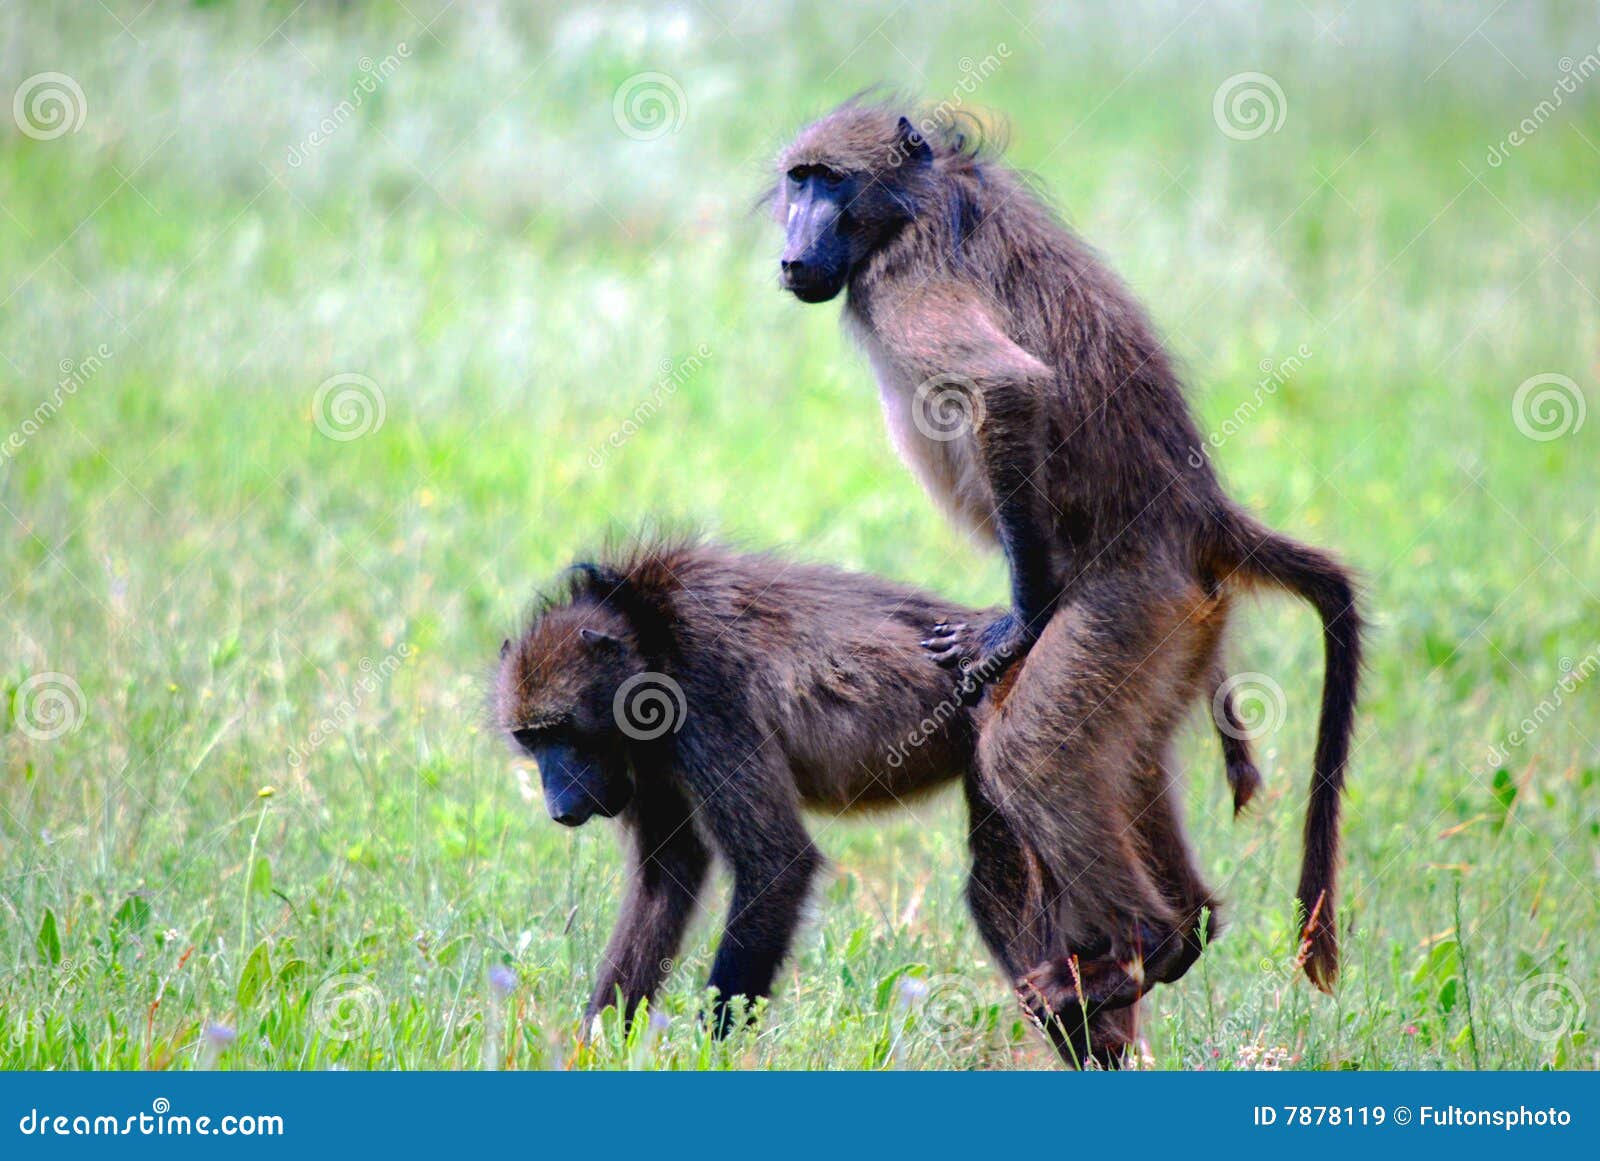 mating baboons